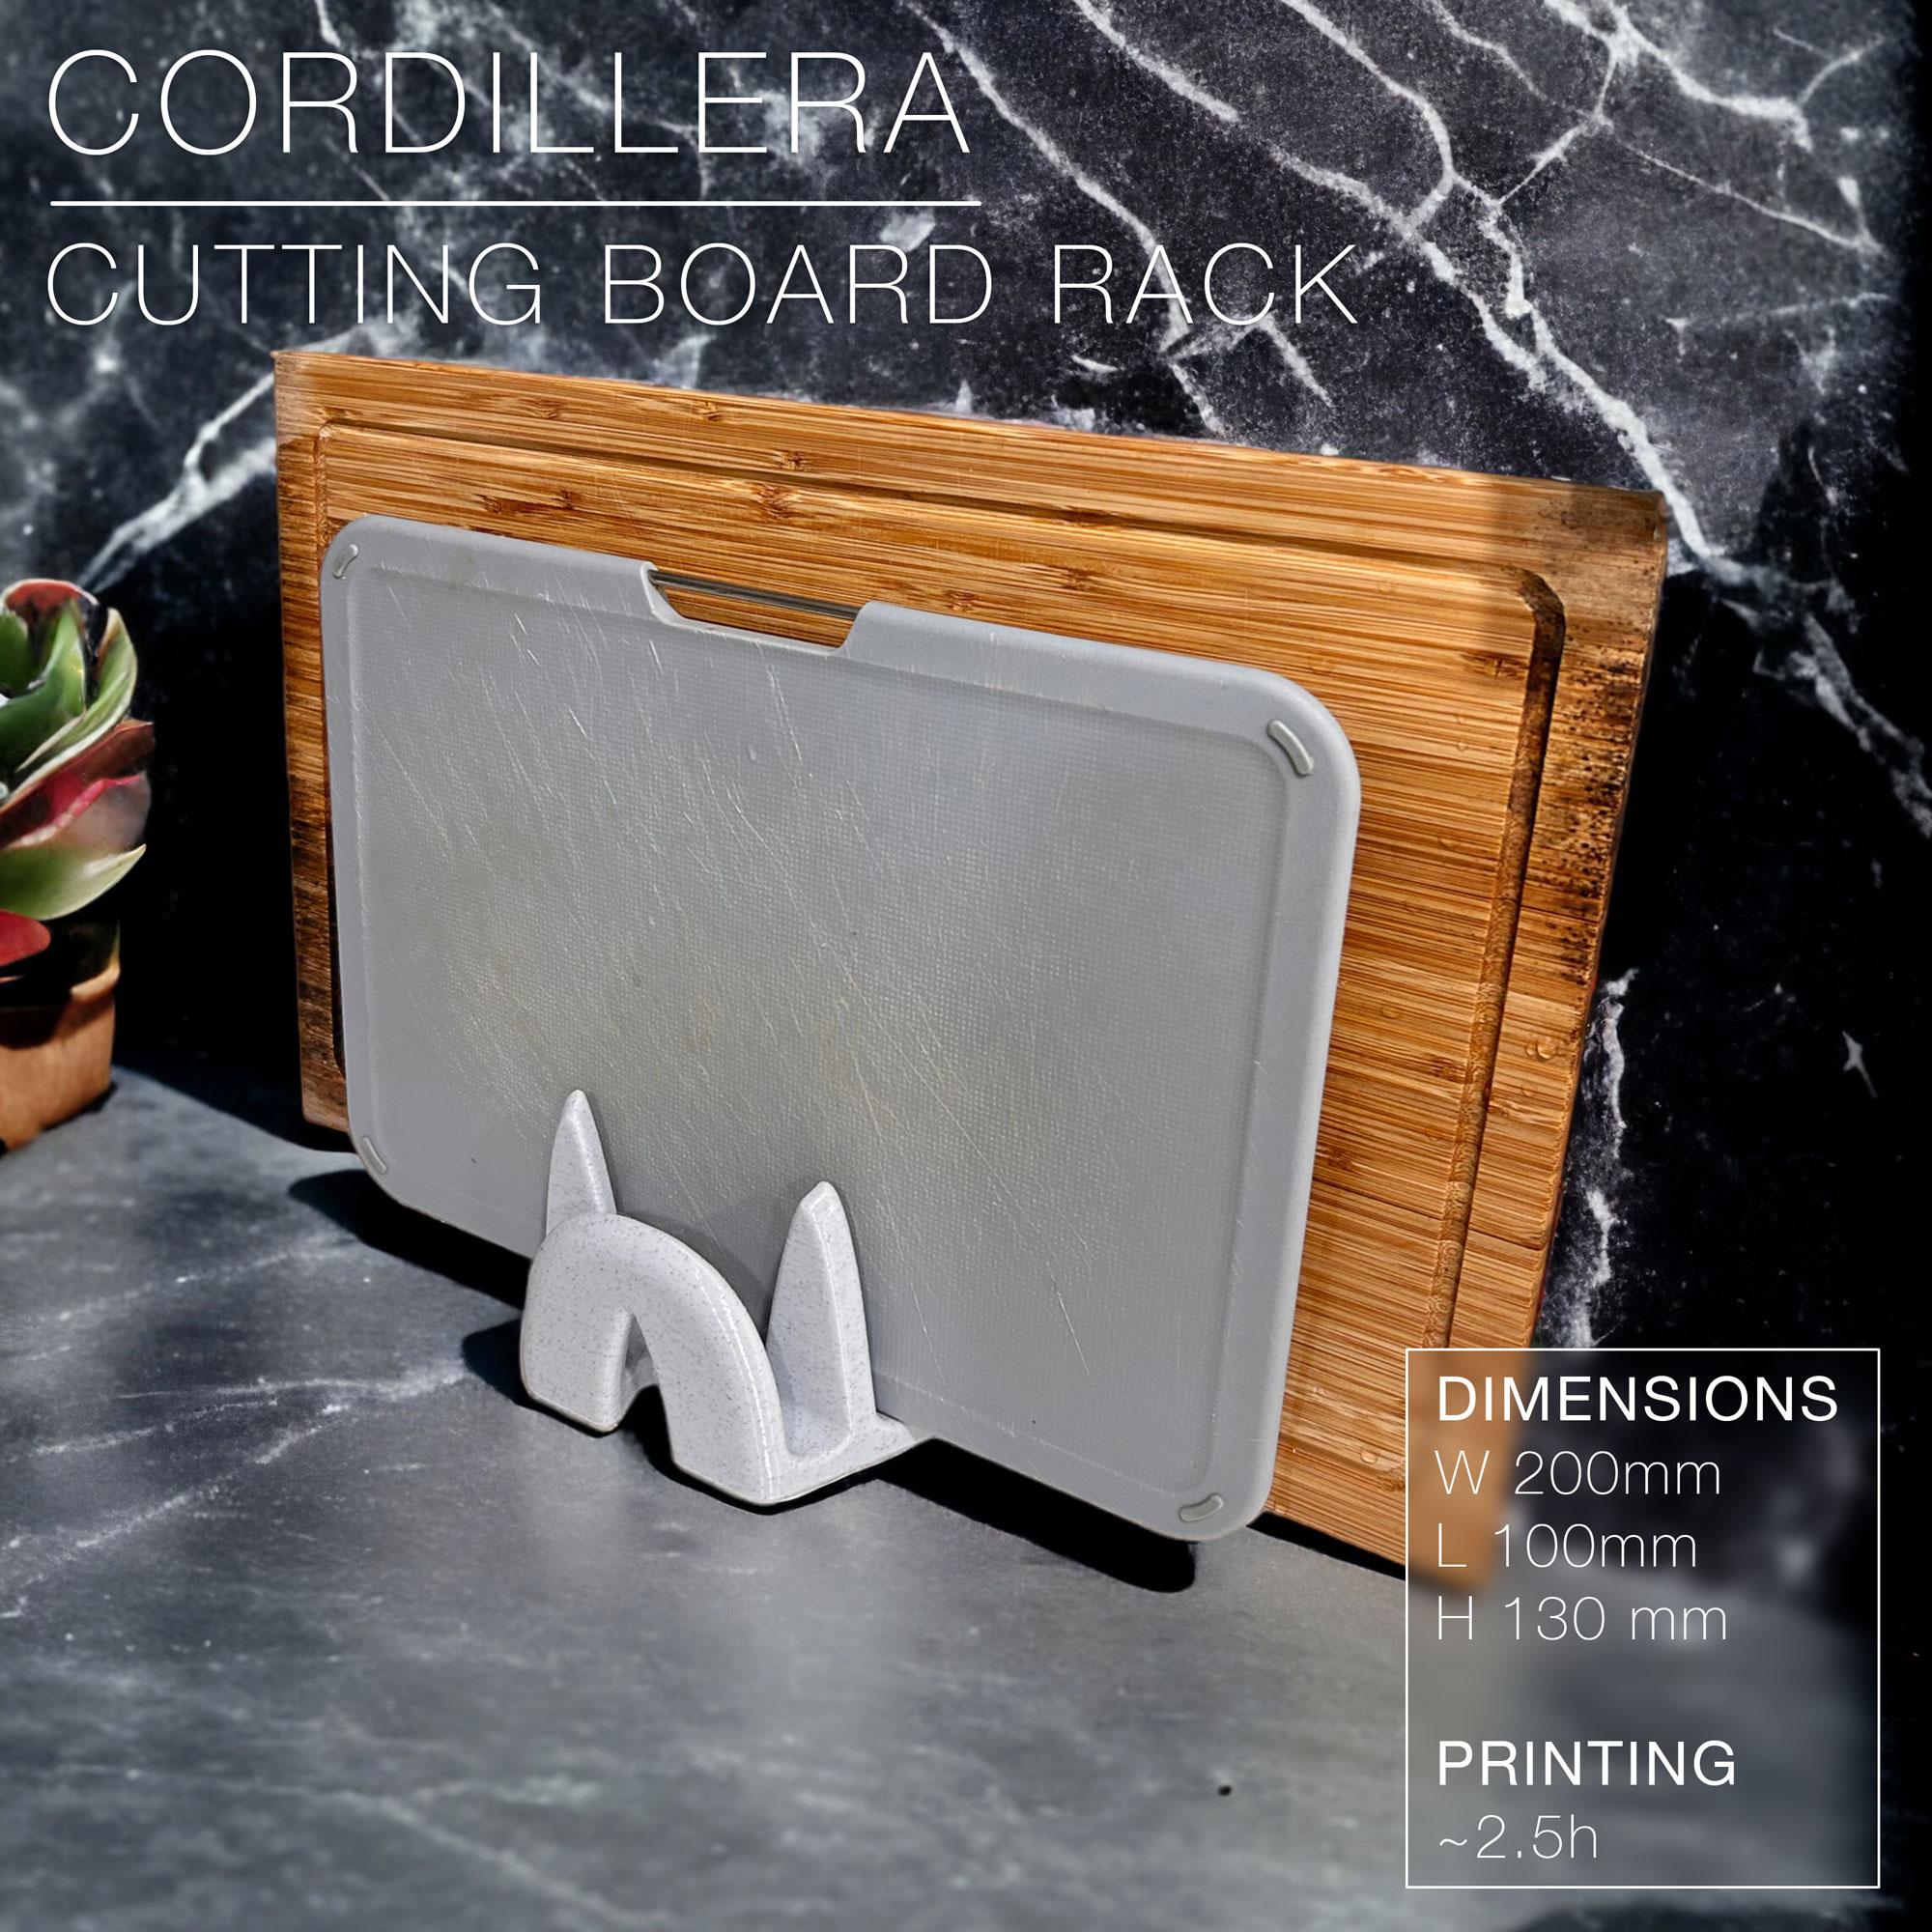 CORDILLERA  |  Cutting-Board Rack 3d model